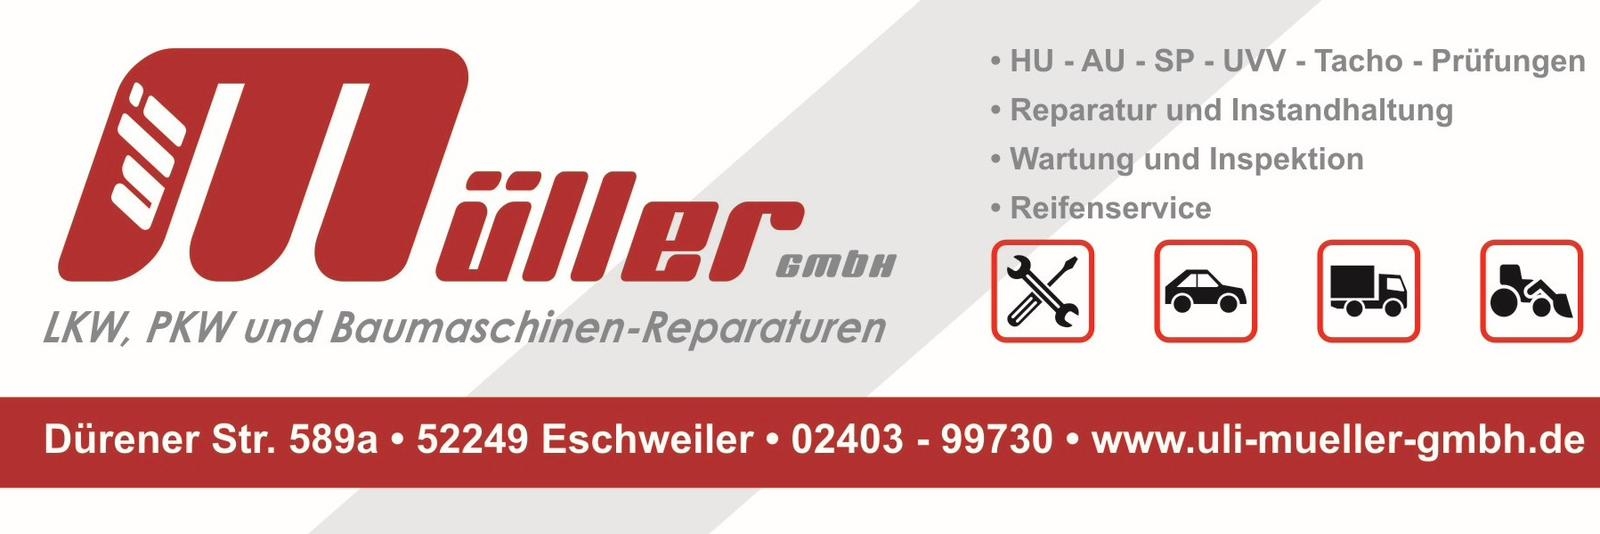 Uli Müller GmbH_Logo